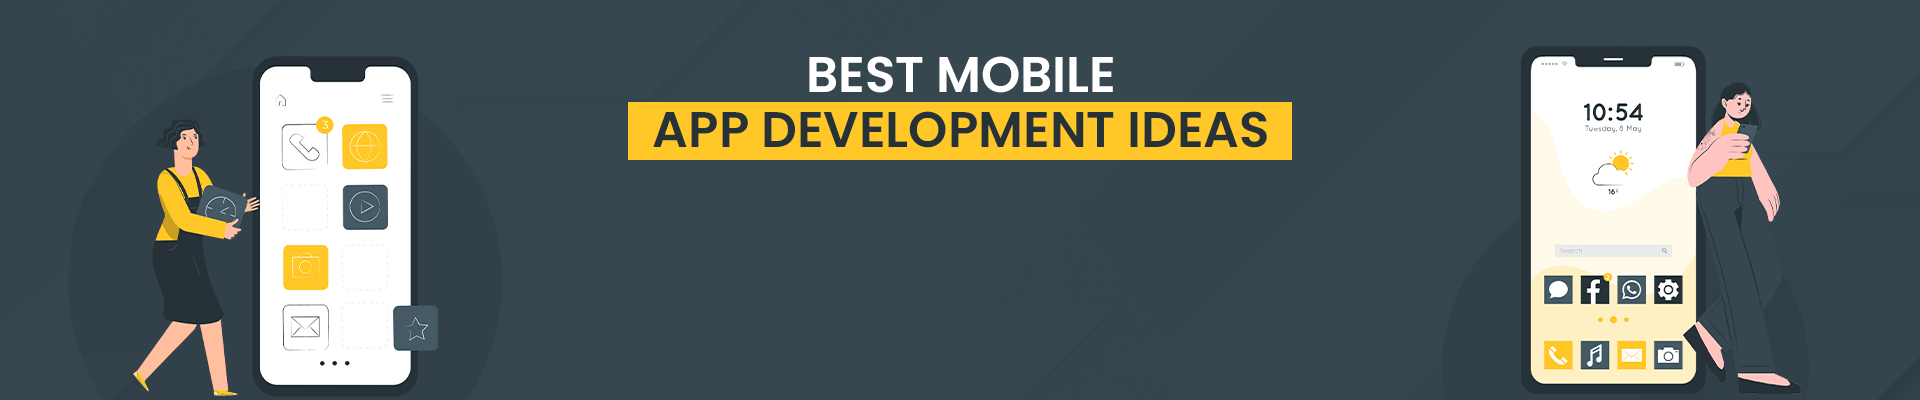 Mobile App Ideas for Startup